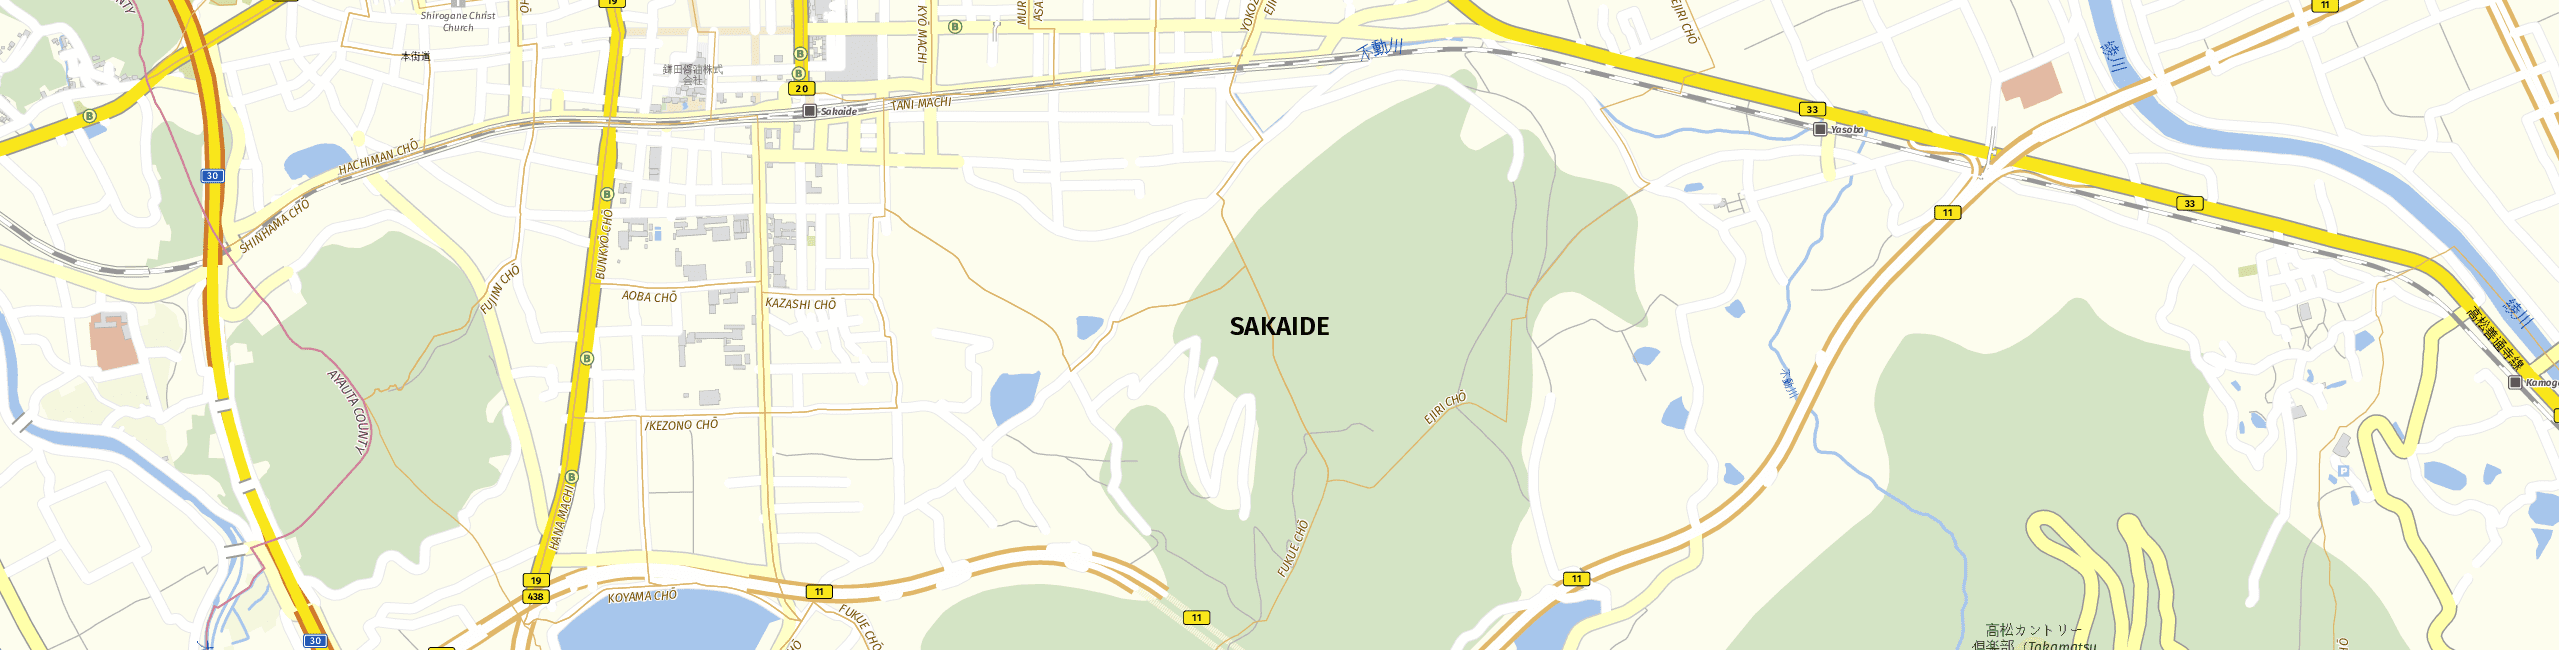 Stadtplan Sakaide zum Downloaden.